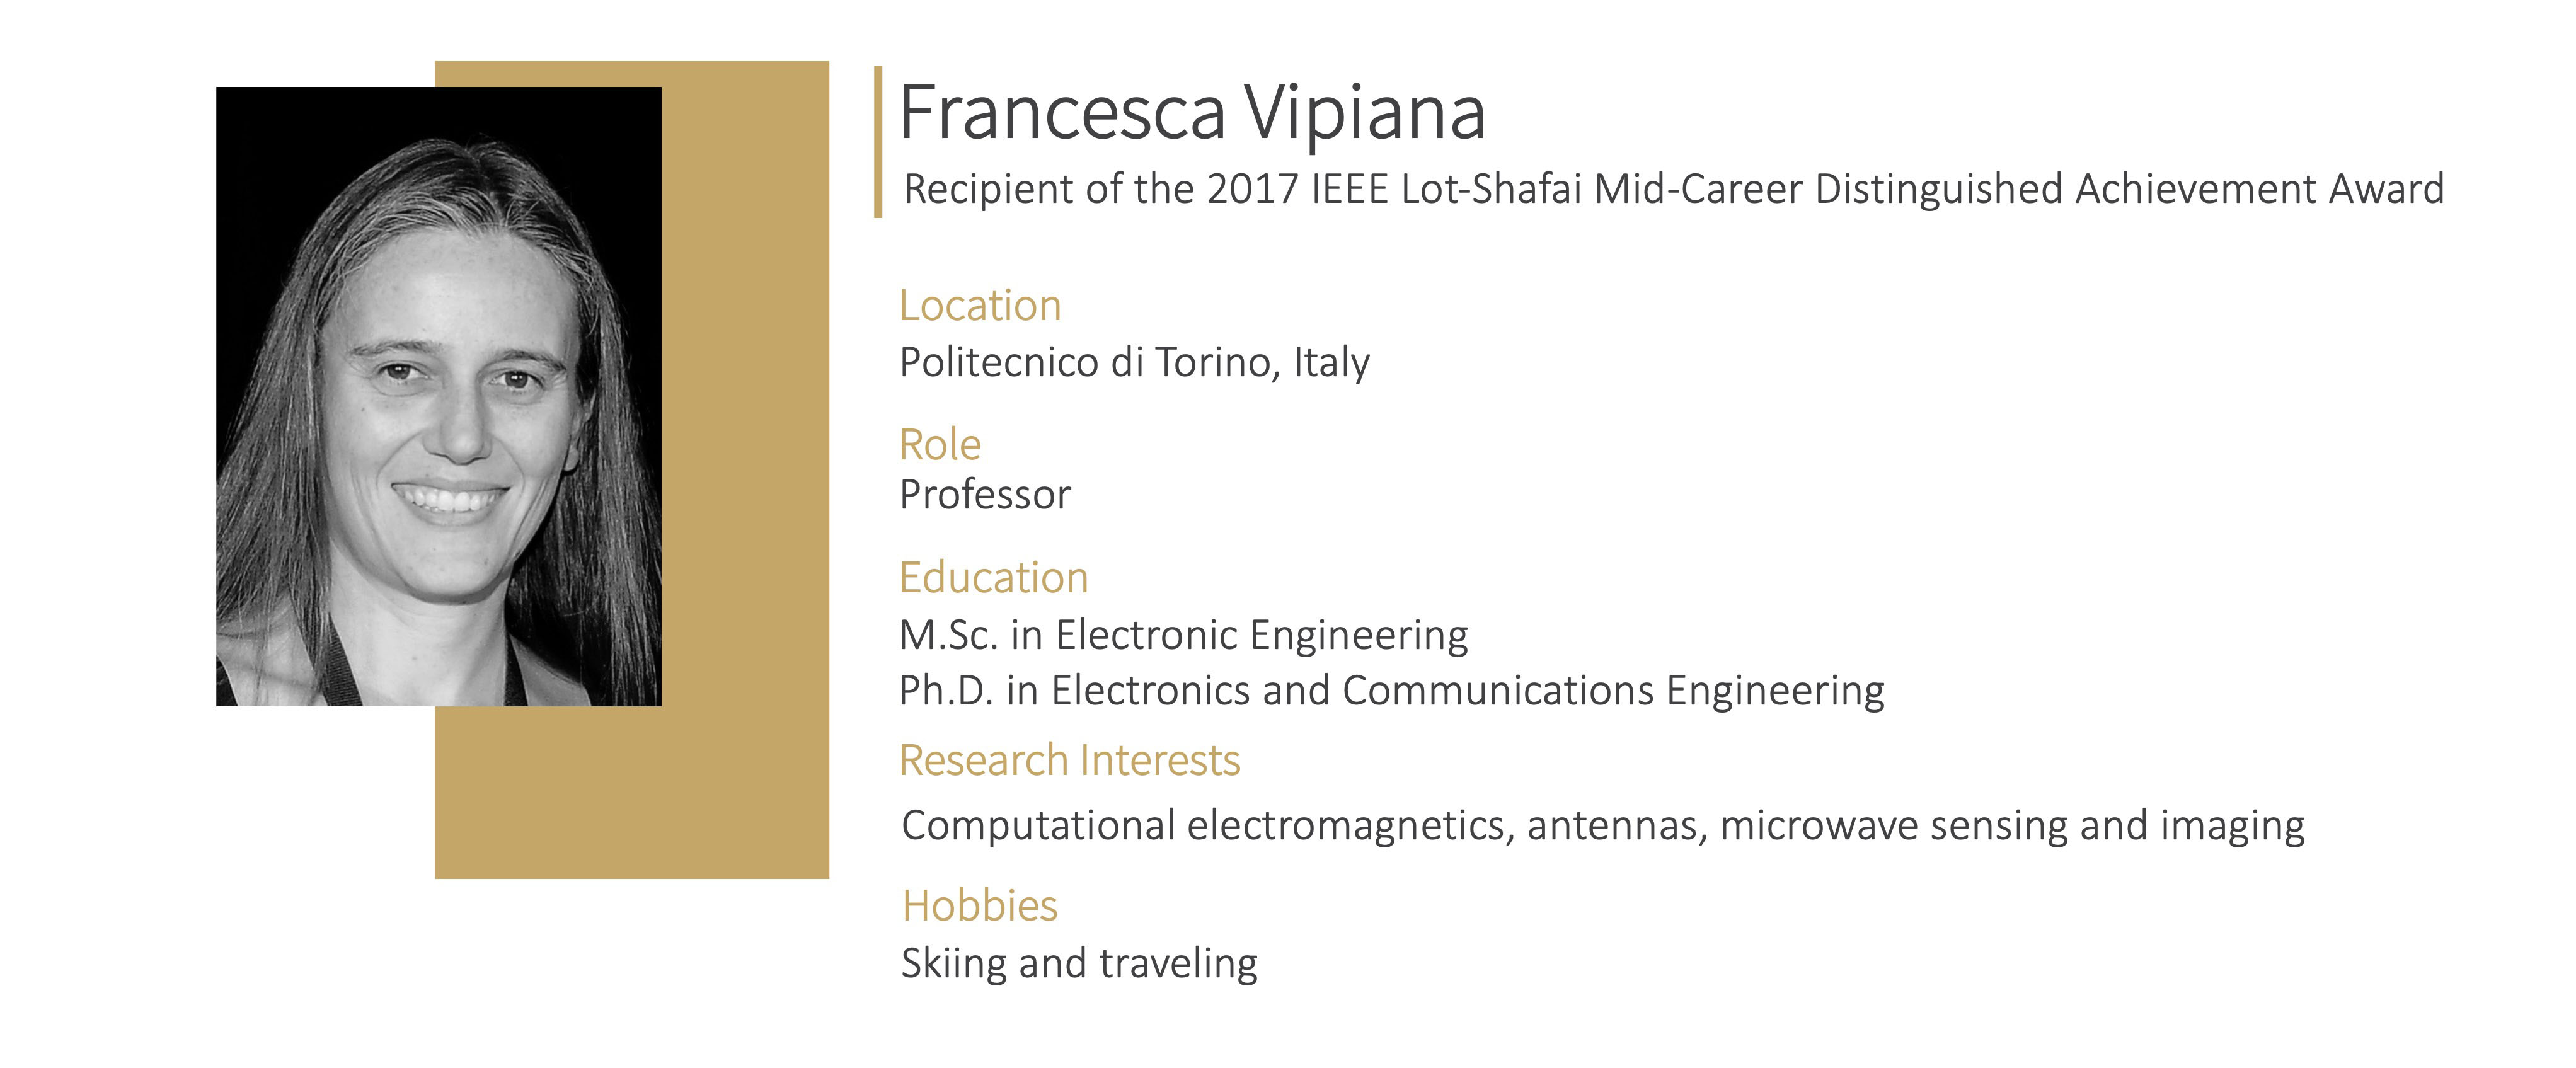 Francesca Vipiana